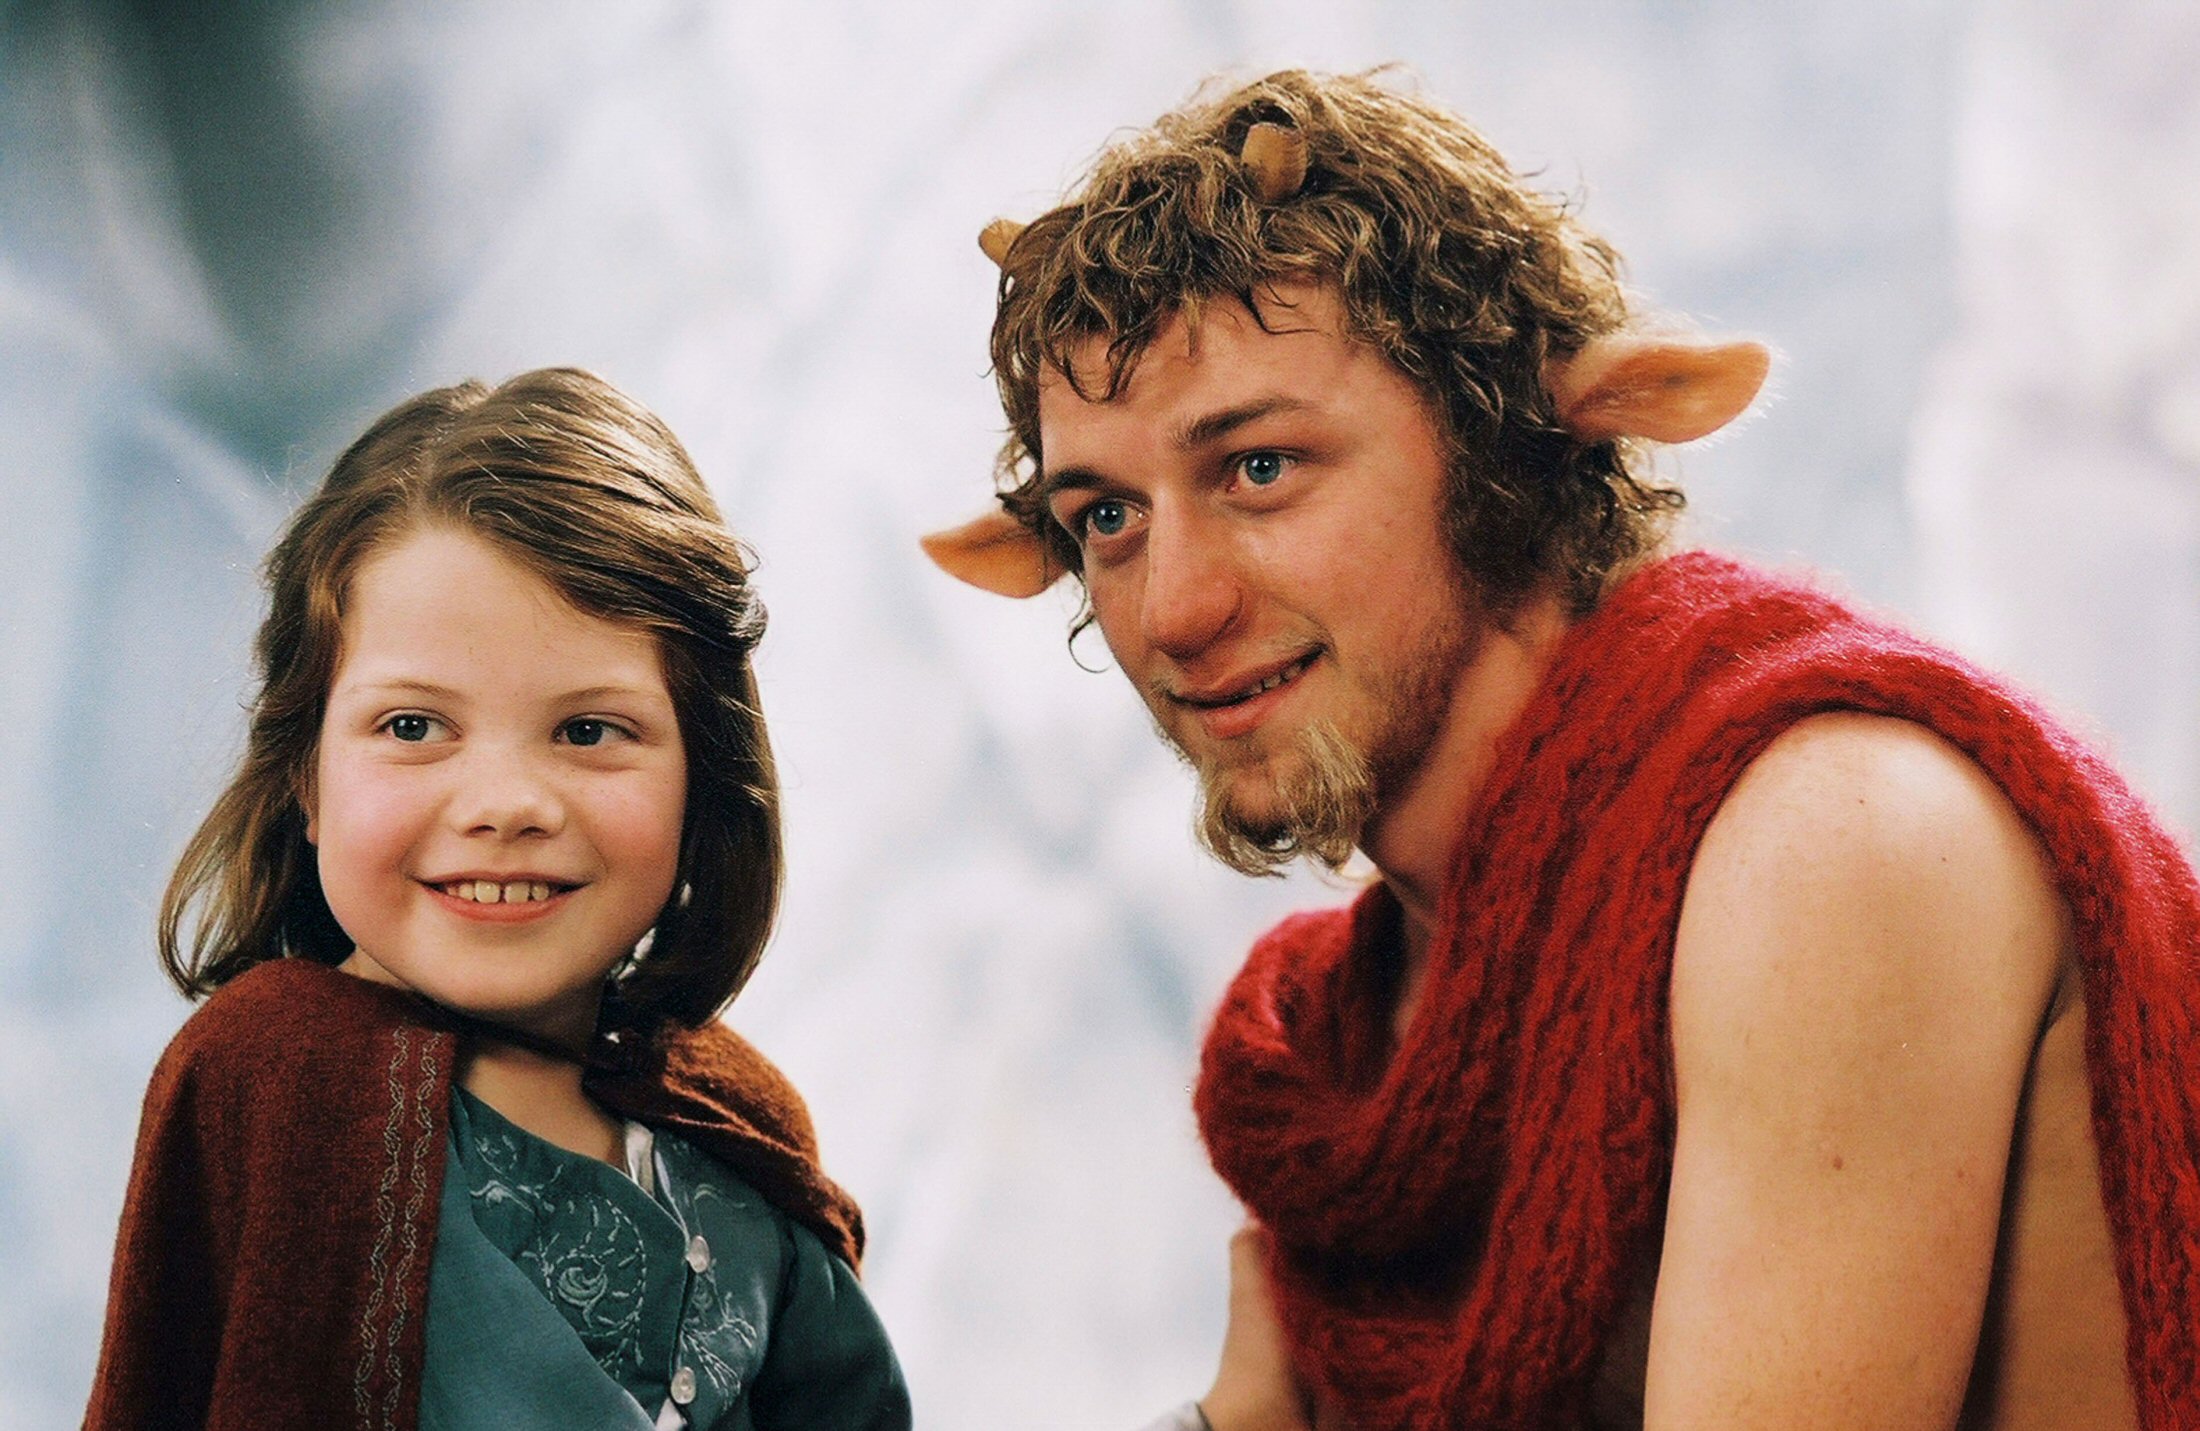 Opis Aslana Opowieści Z Narnii Production Photos - NarniaWeb | Netflix's Narnia Movies